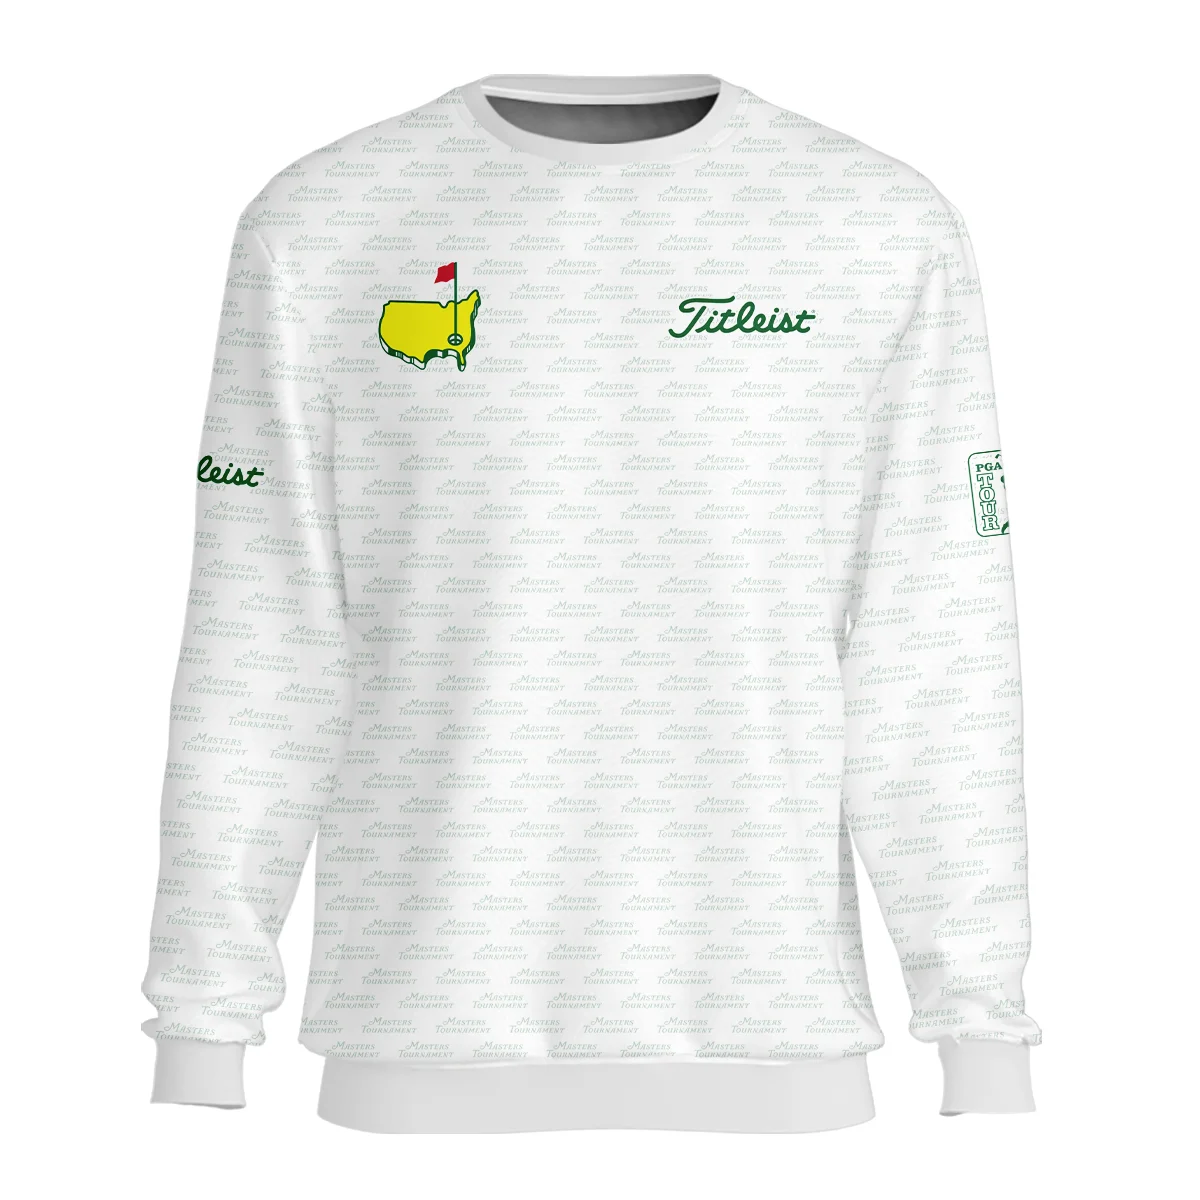 Masters Tournament Golf Titleist Bomber Jacket Logo Text Pattern White Green Golf Sports All Over Print Bomber Jacket